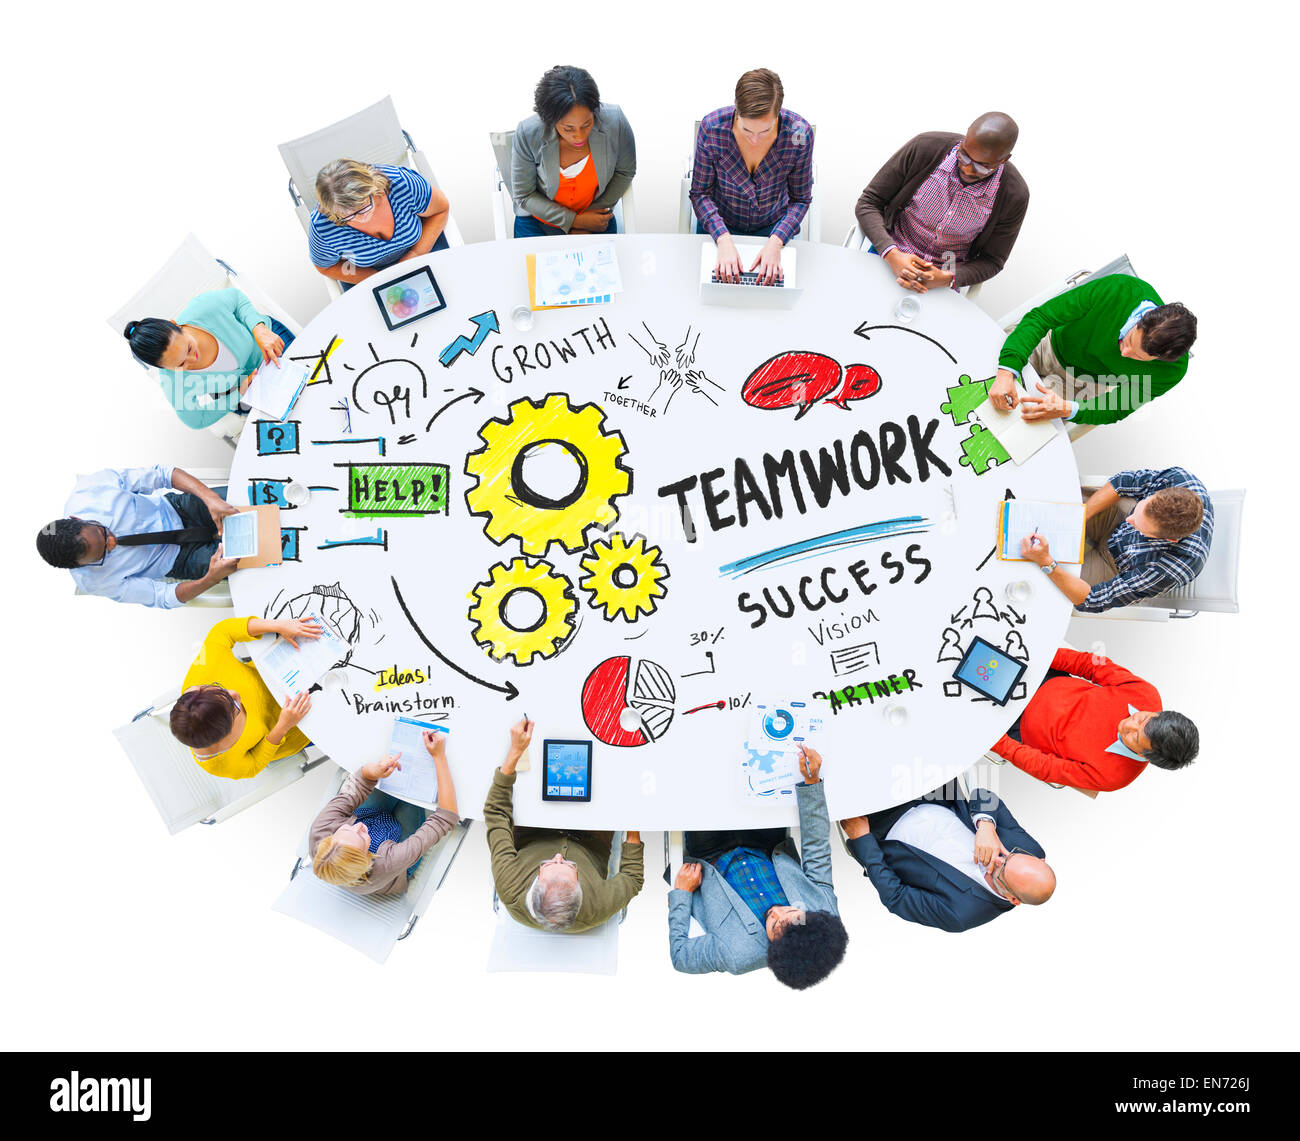 Teamwork Team Together Collaboration Meeting Office Brainstorming C16